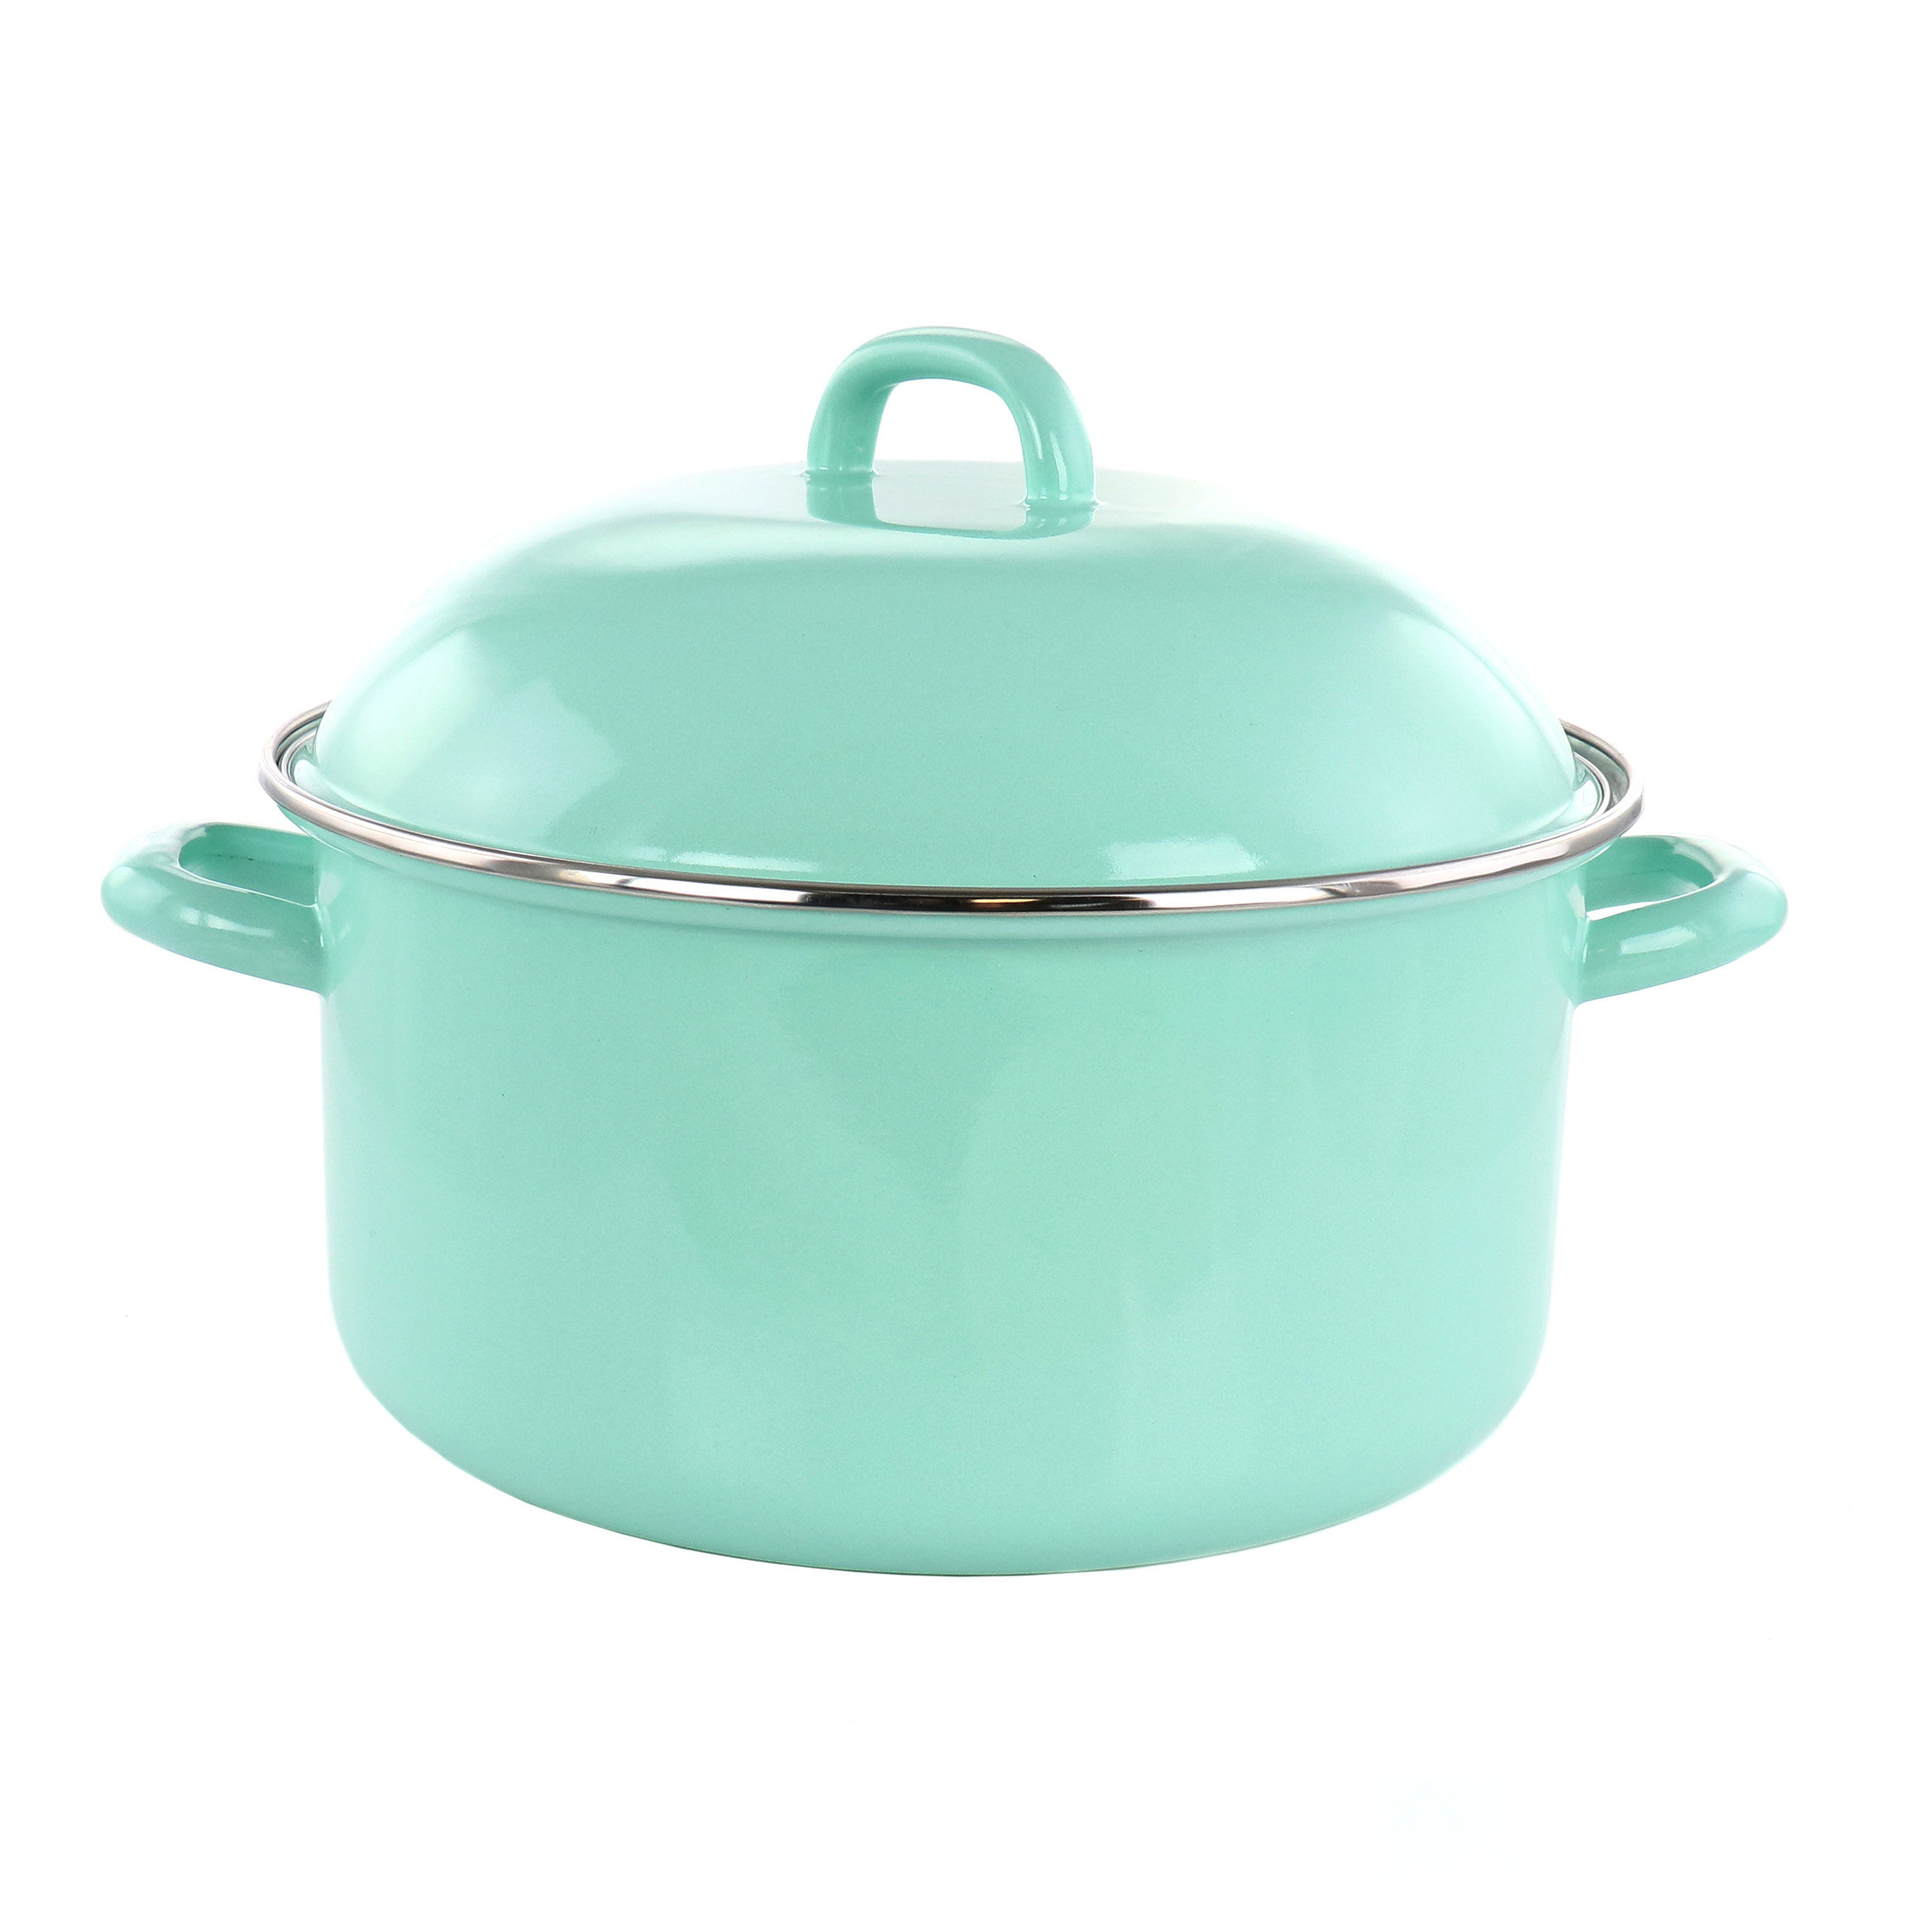 Mint green Martha Stewart 6 quart heavy cast iron Dutch oven pan